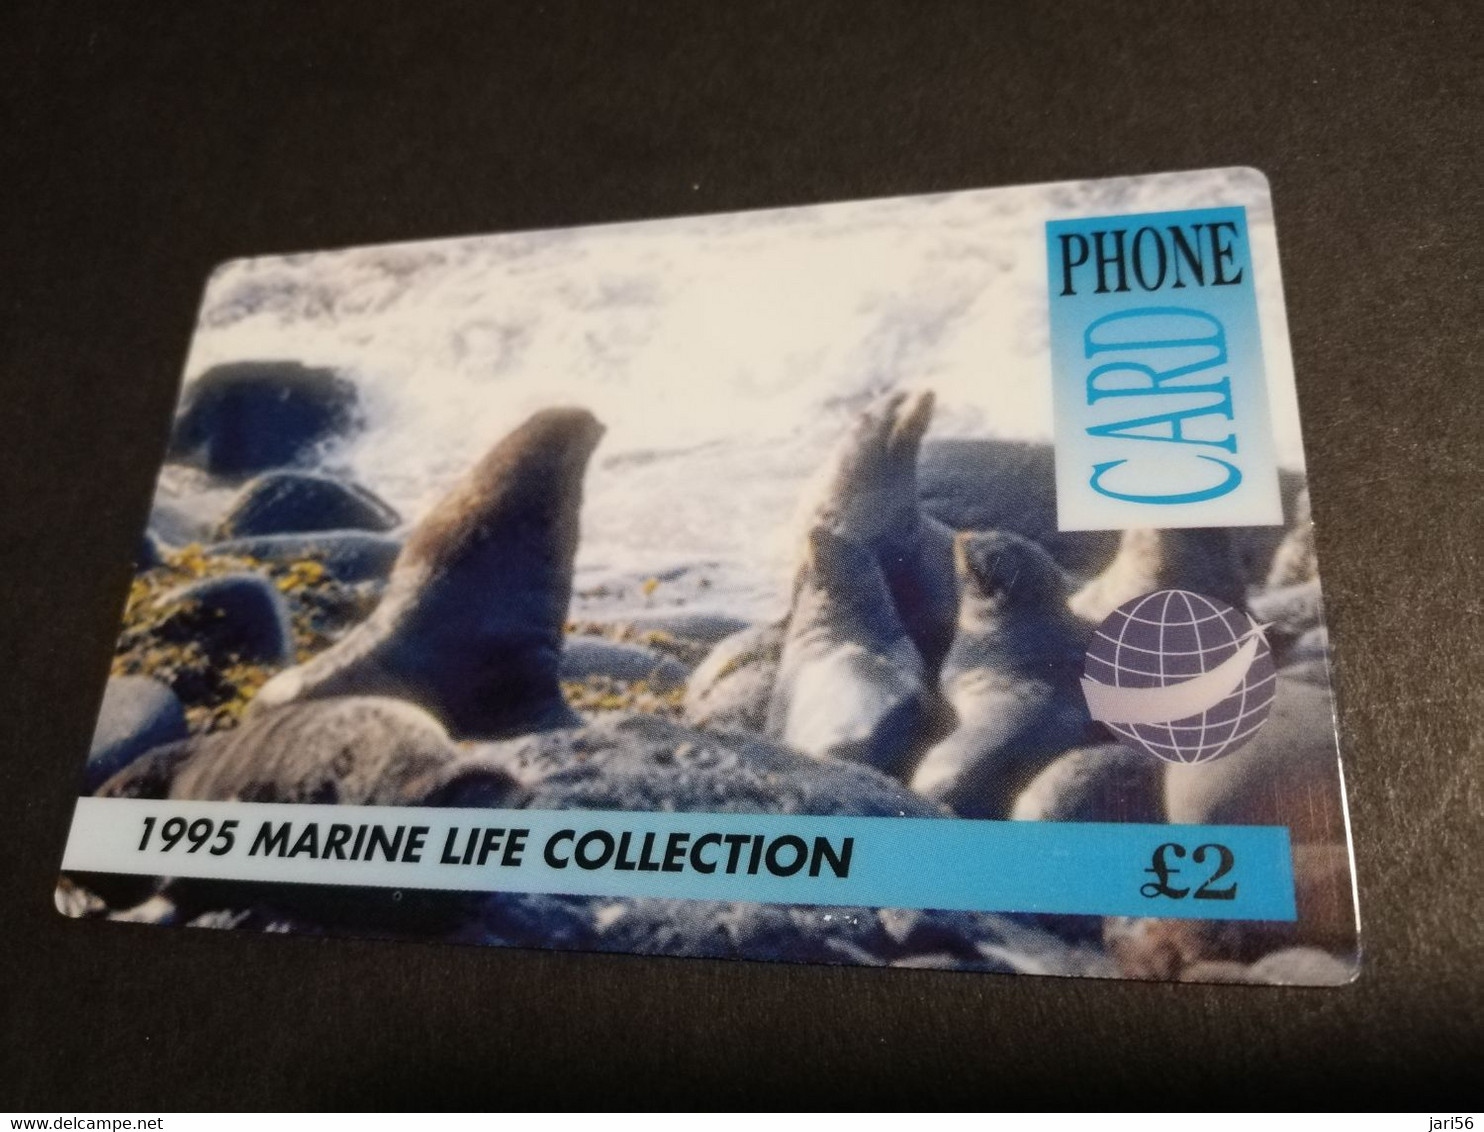 GREAT BRITAIN   2 POUND   MARINE LIFE COLLECTION SEALION     DIT PHONECARD    PREPAID CARD      **5925** - Collezioni